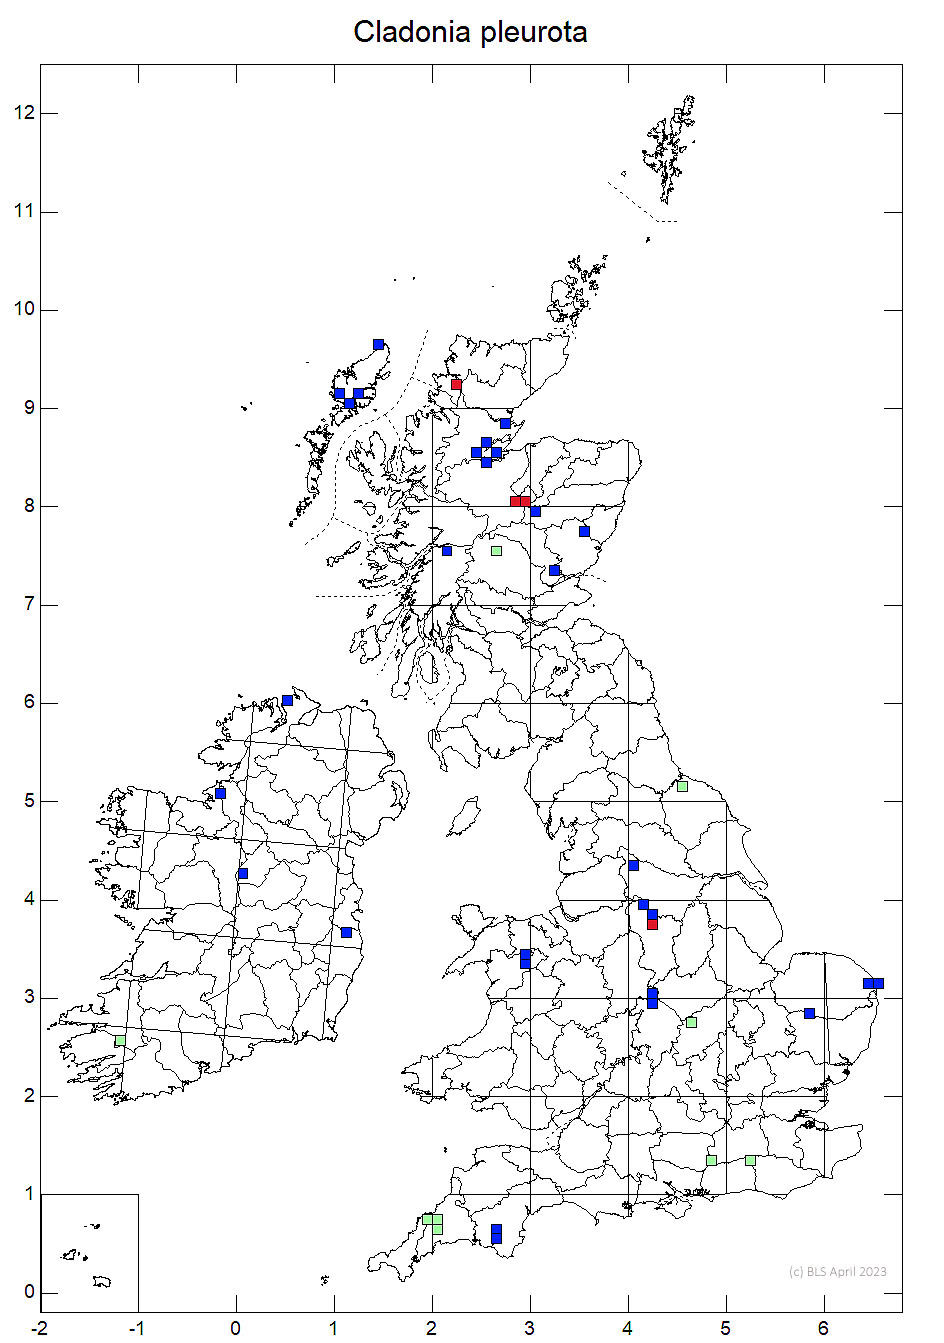 Cladonia pleurota 10km sq distribution map